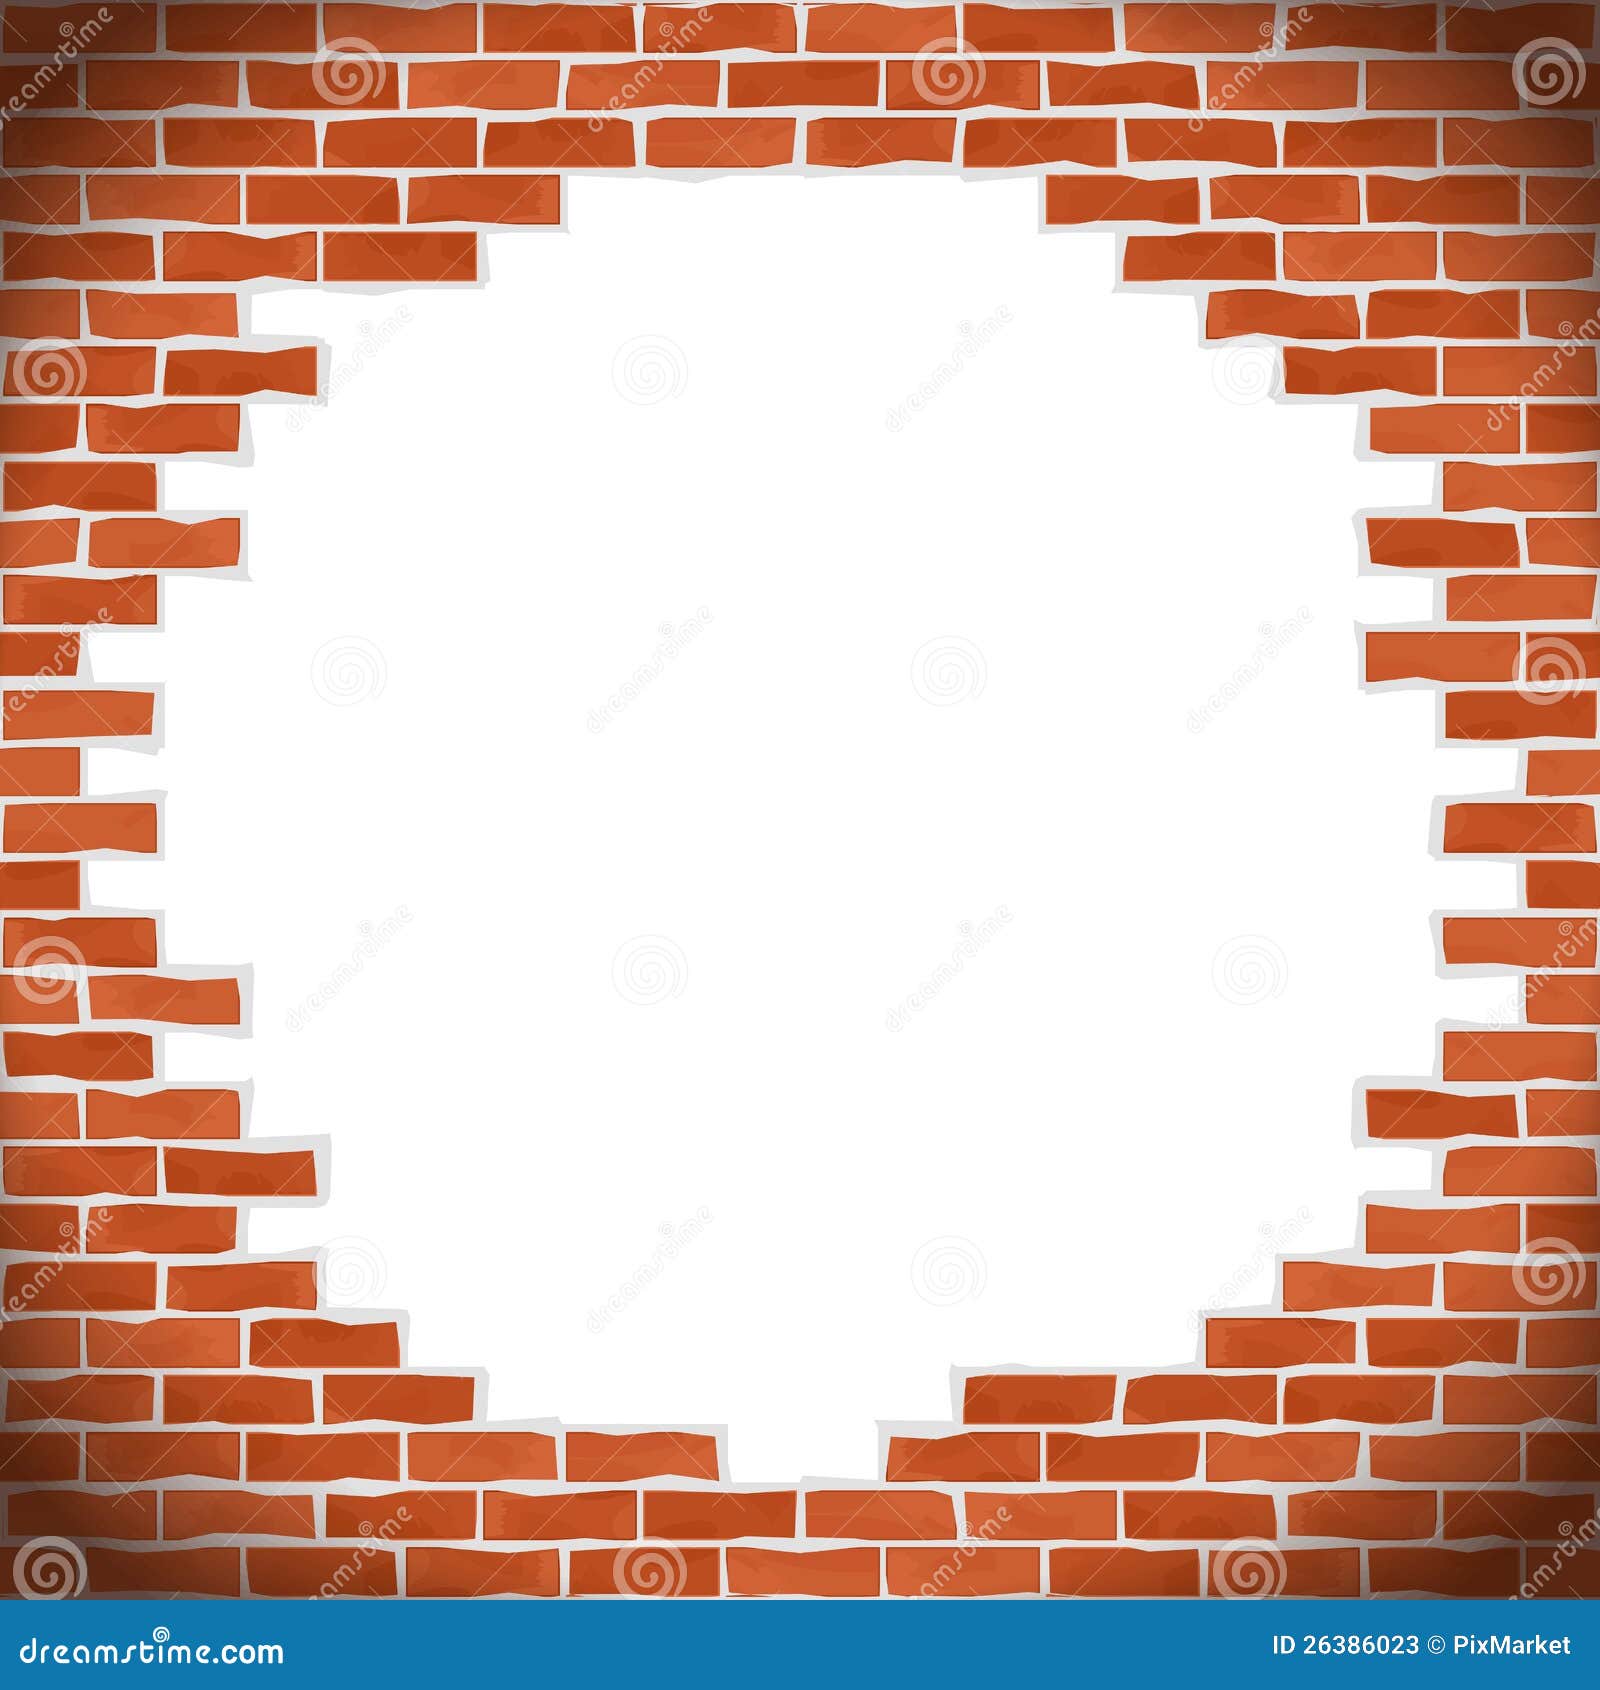 Broken Brick Wall Stock Photos - Image: 26386023